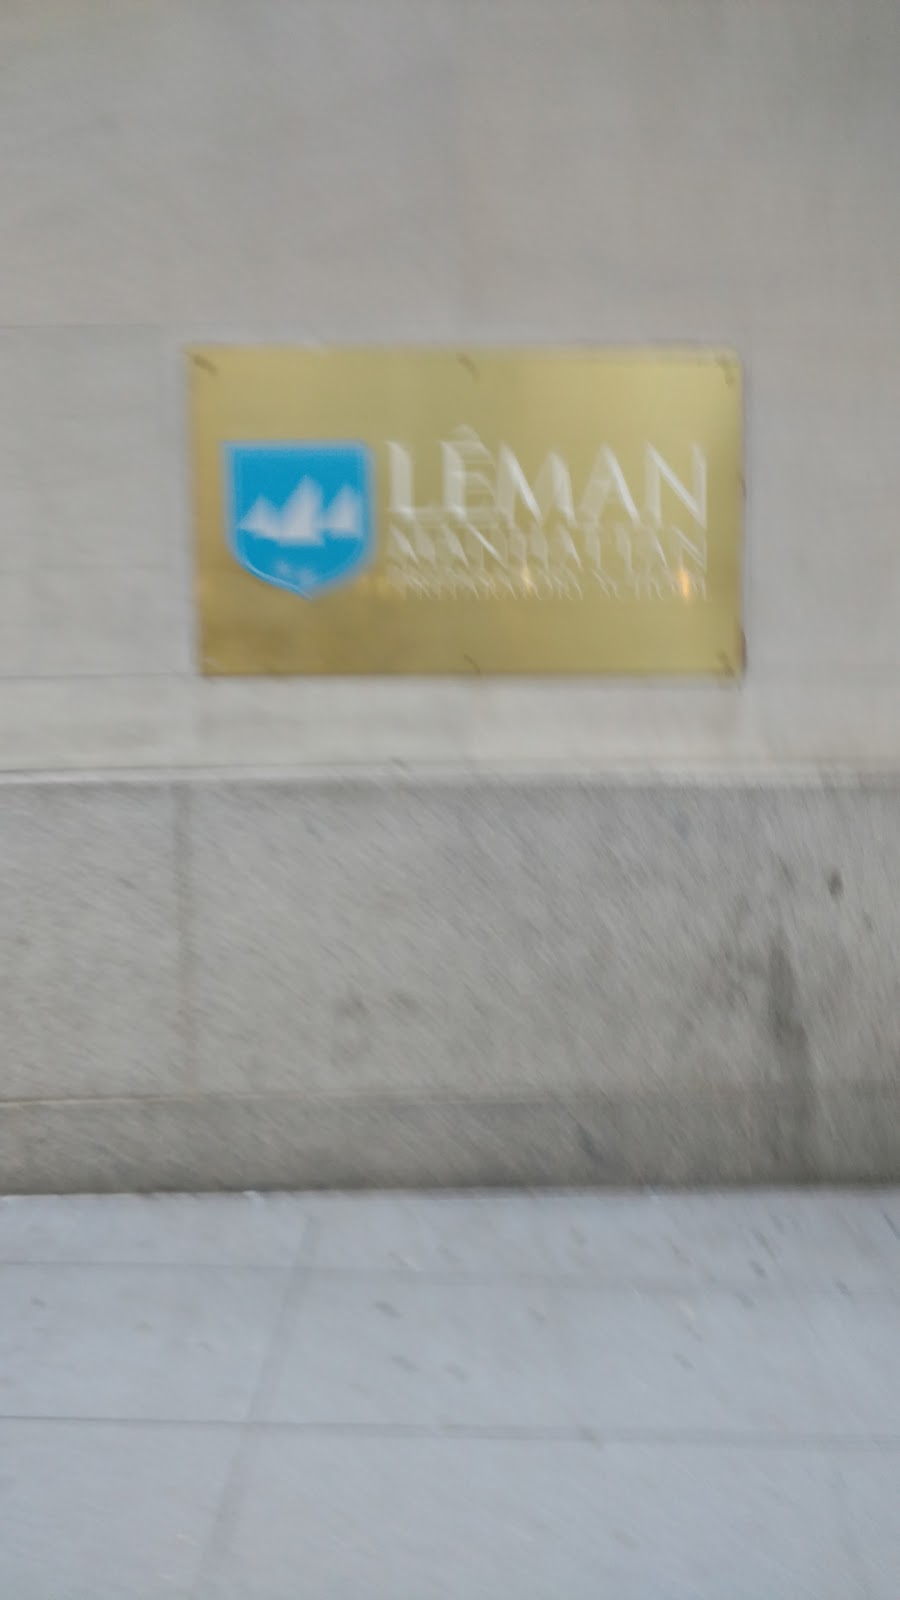 Photo of Leman Manhattan Preparatory School in New York City, New York, United States - 3 Picture of Point of interest, Establishment, School